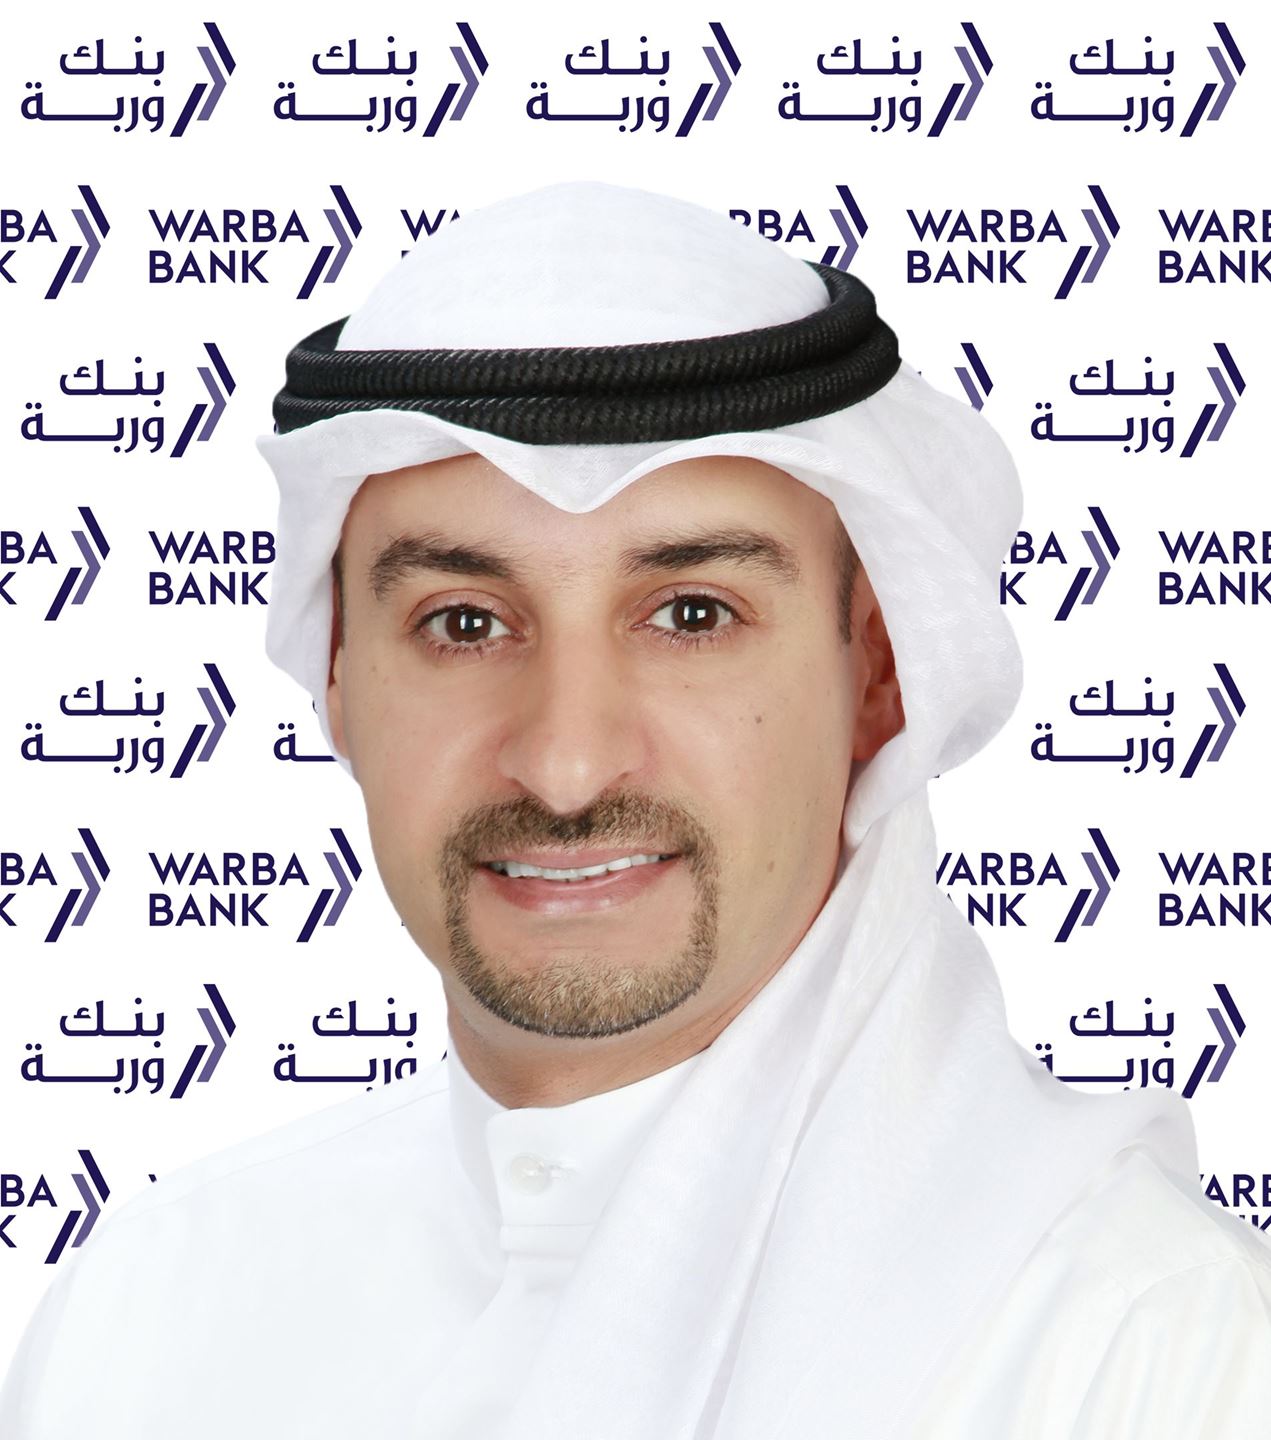  Mr. Ayman Salem AlMutairi - Executive Manager Corporate Communication